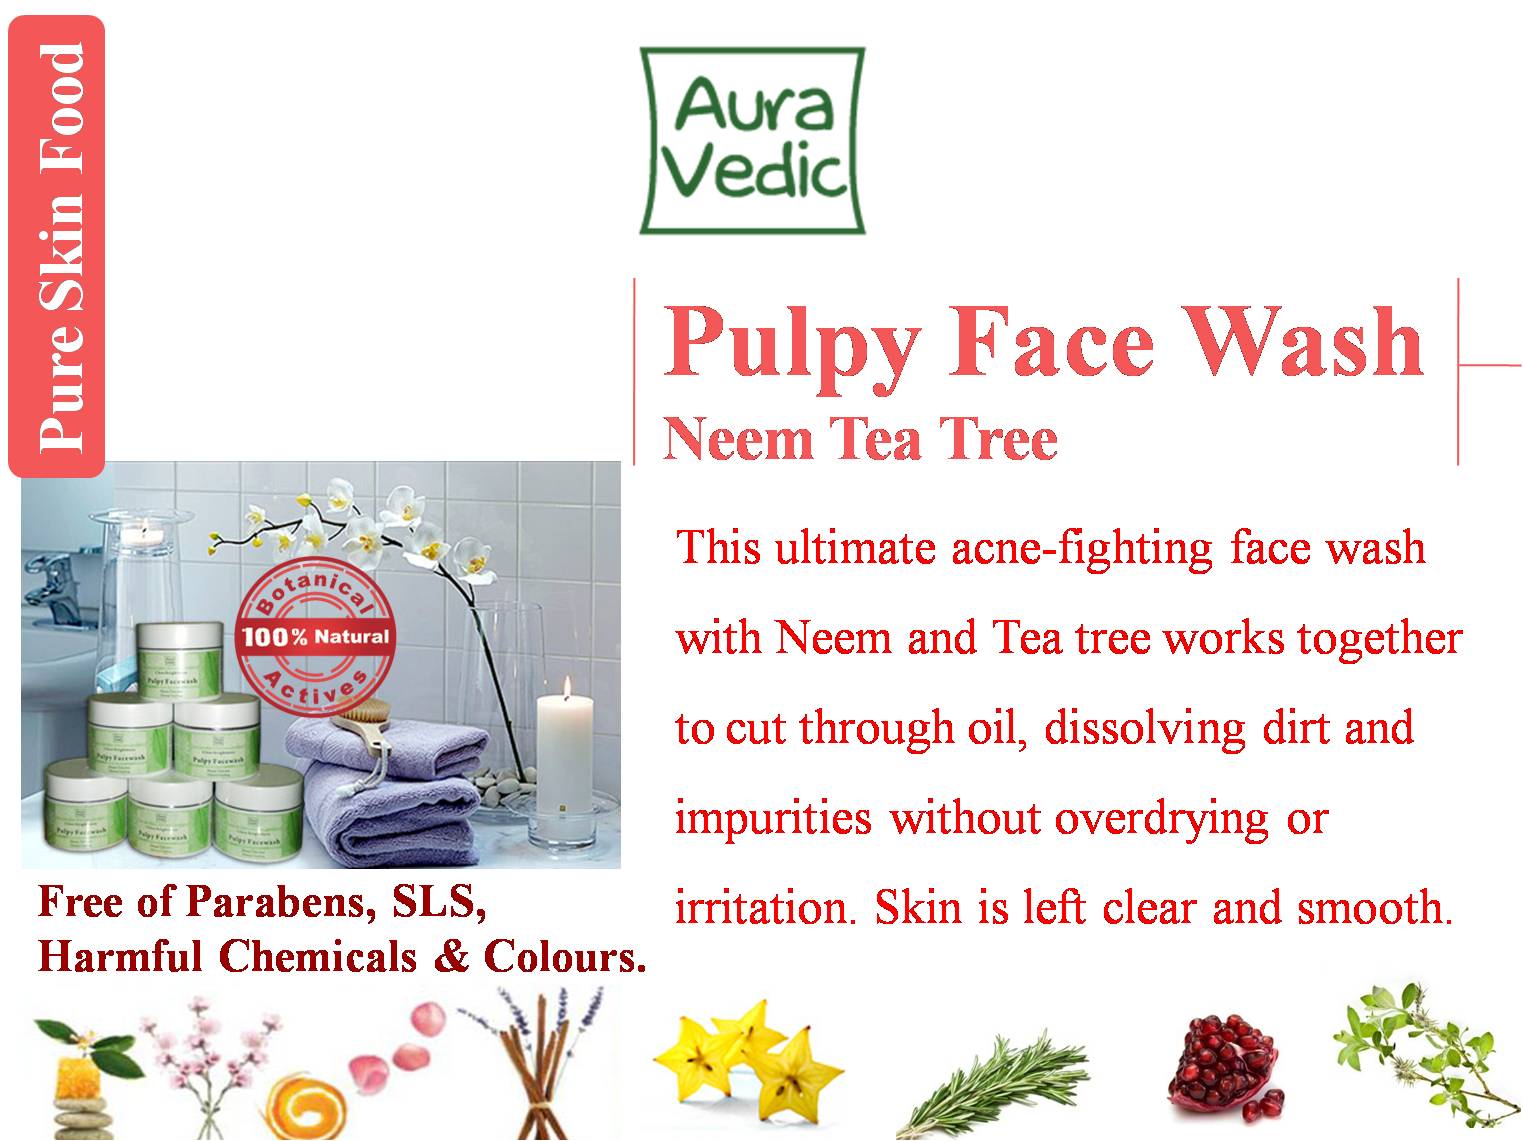 Neem Tea Tree Pulpy Face Wash